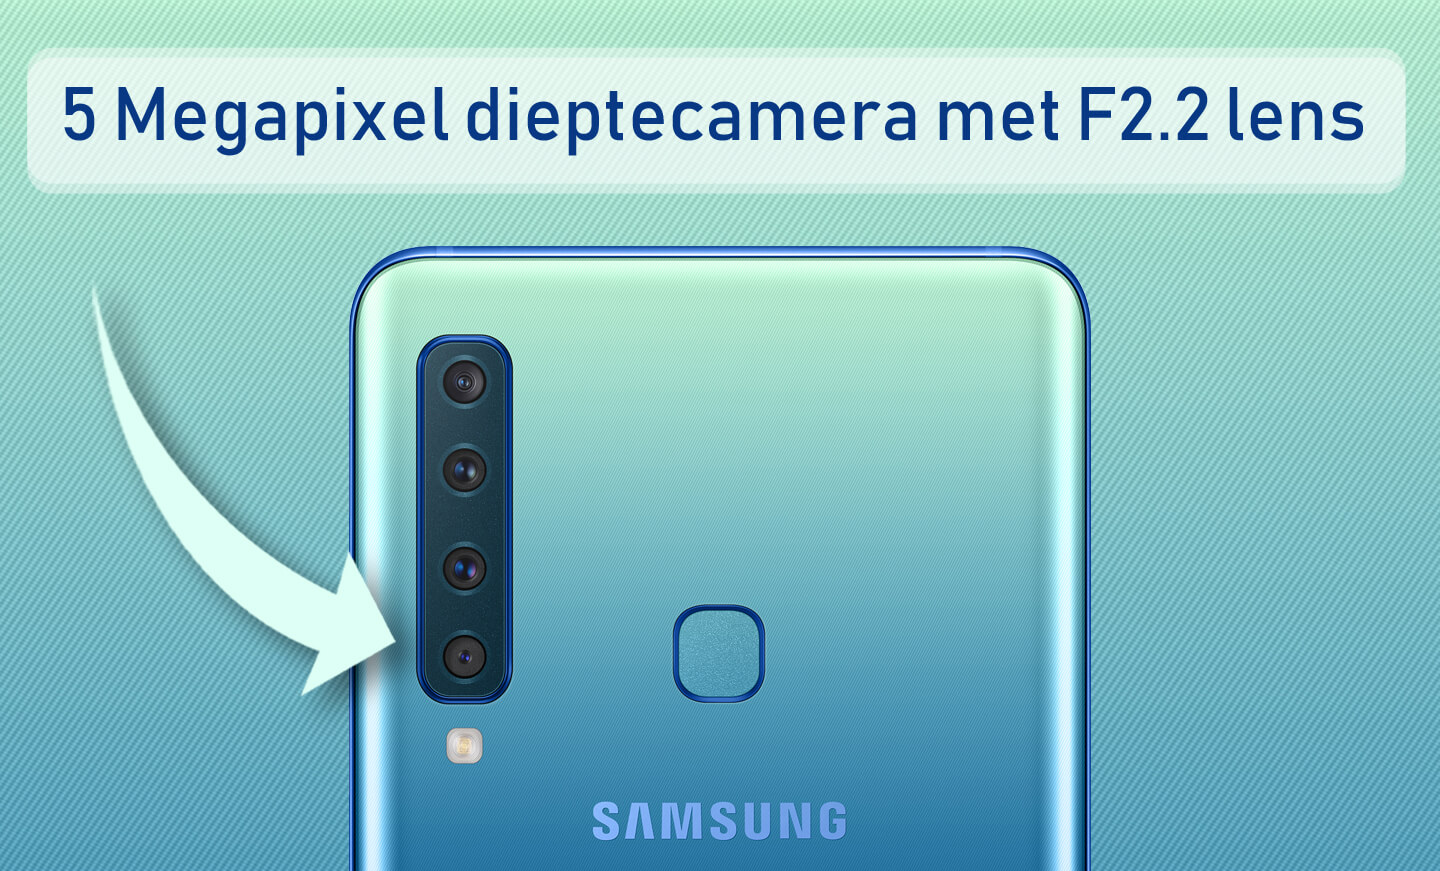 Camera smartphones